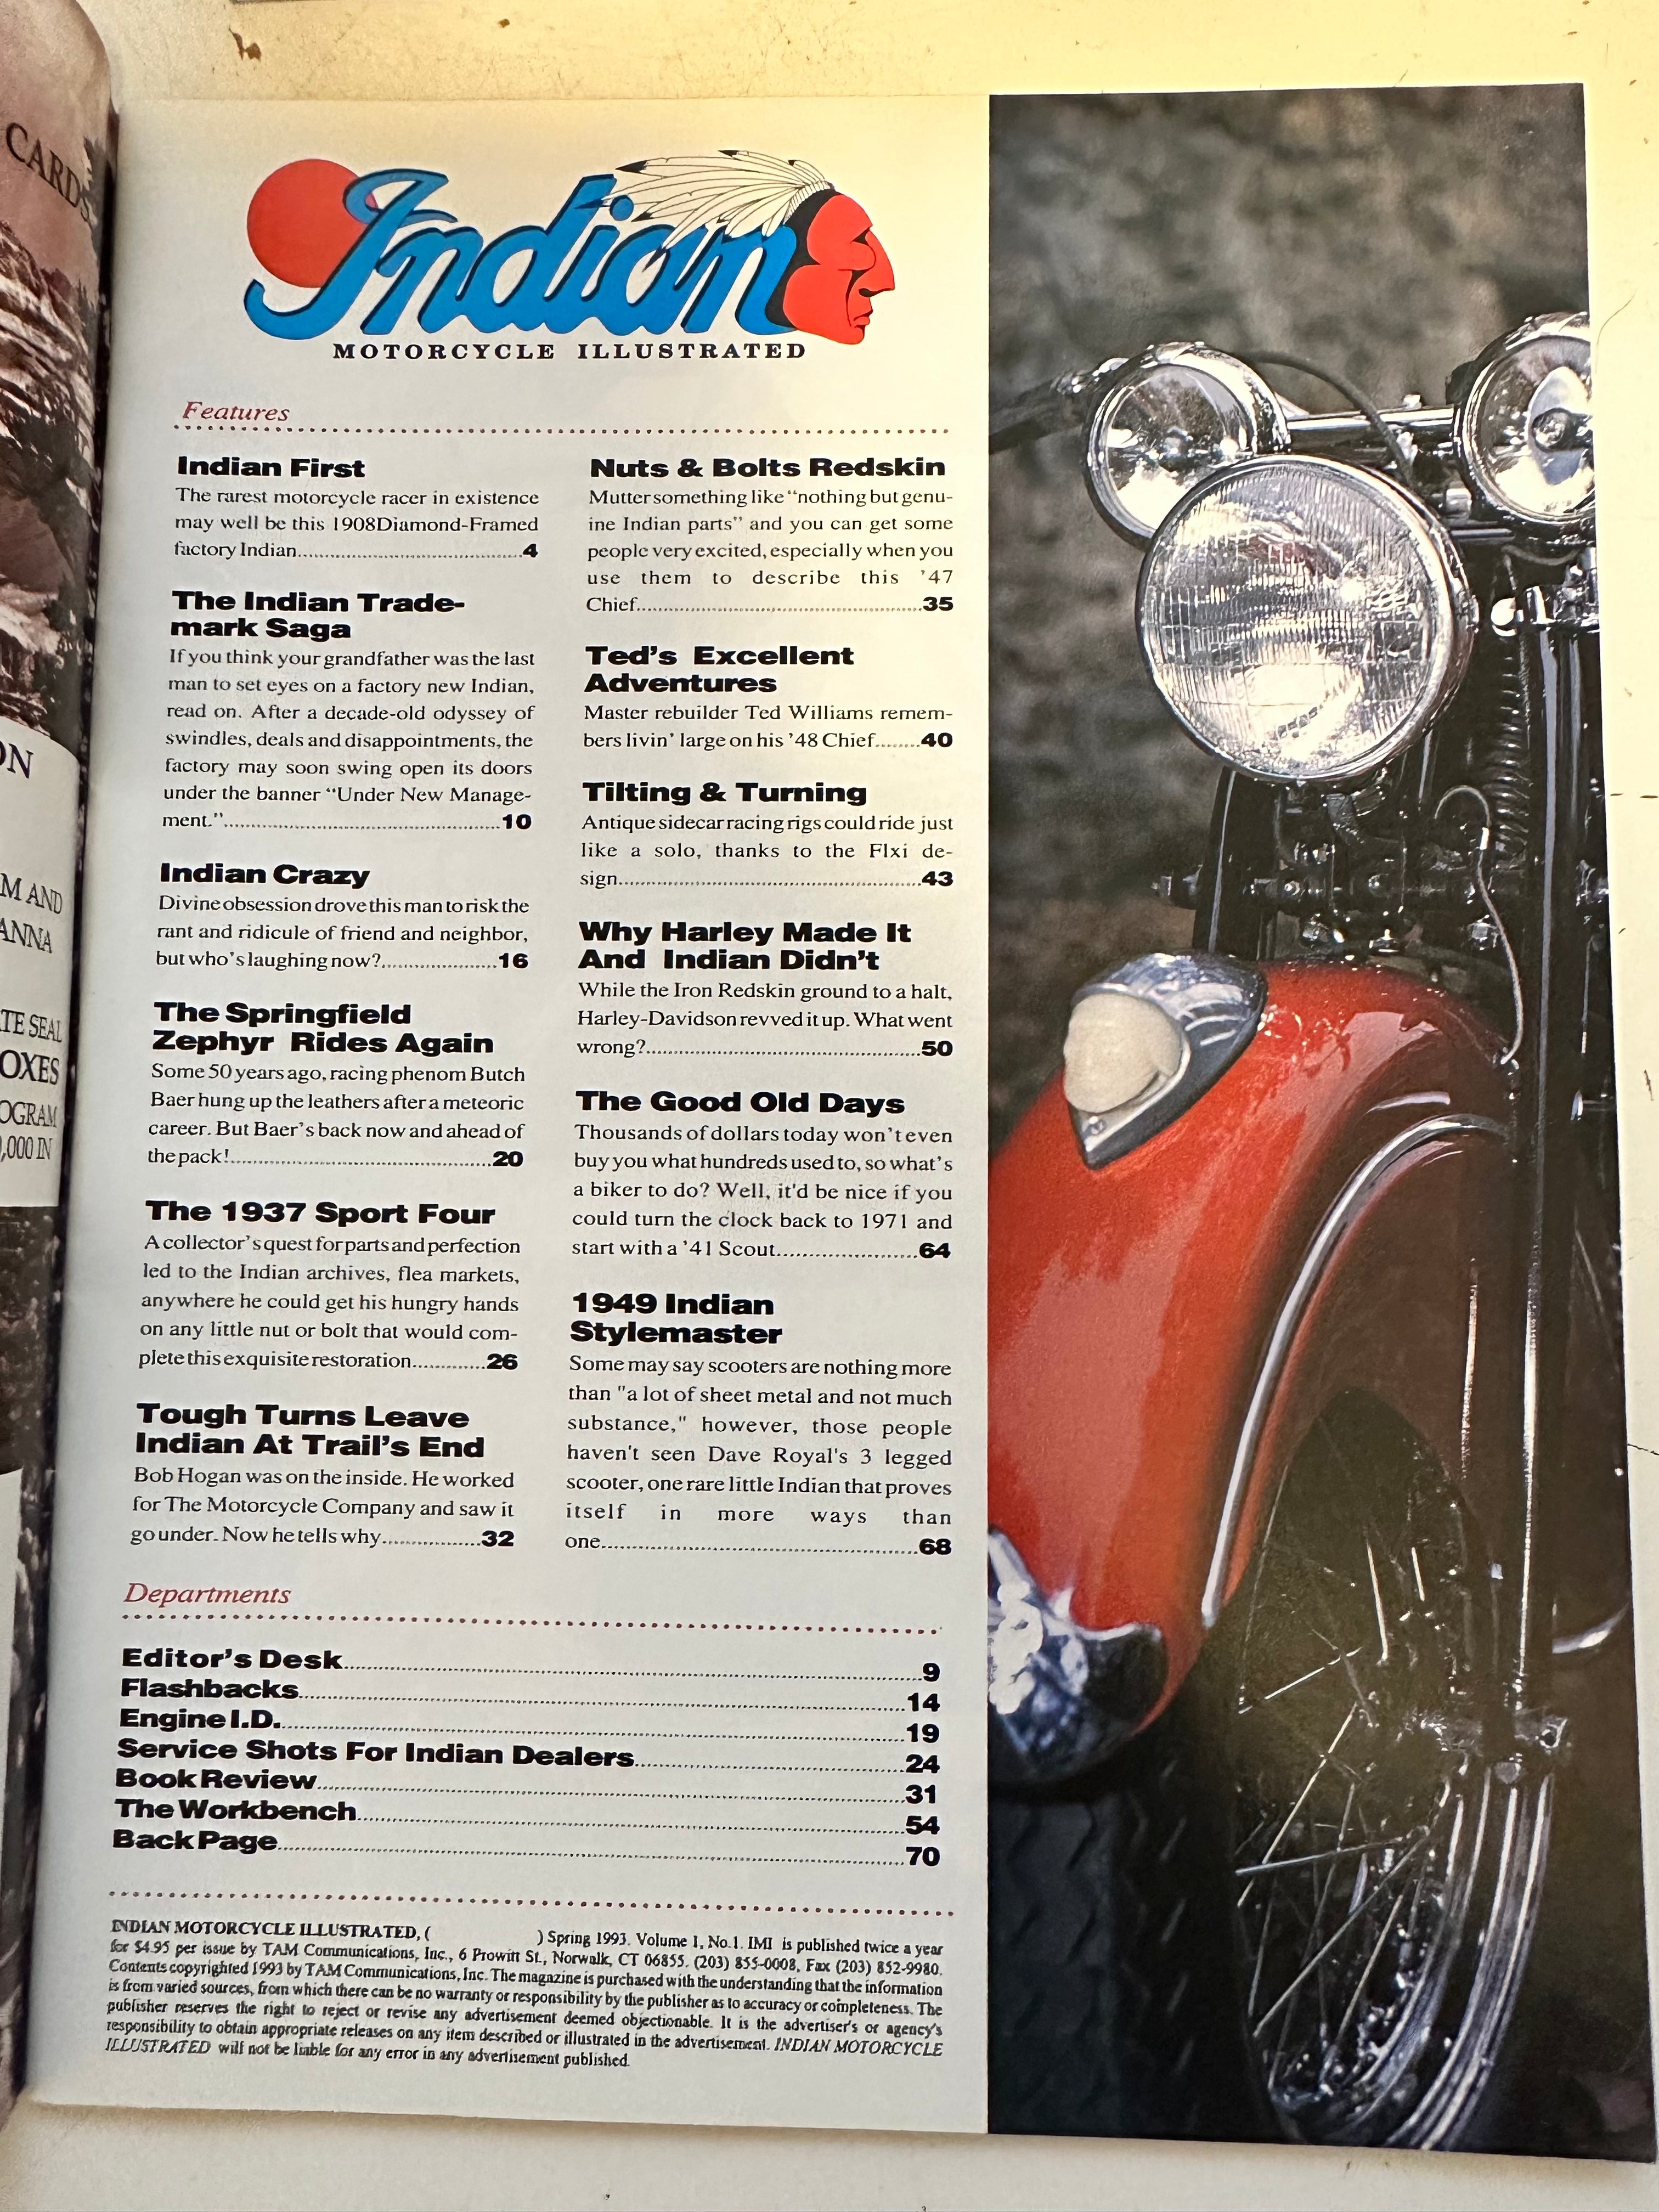 Indian Motorcycle #1 issue magazine 1993